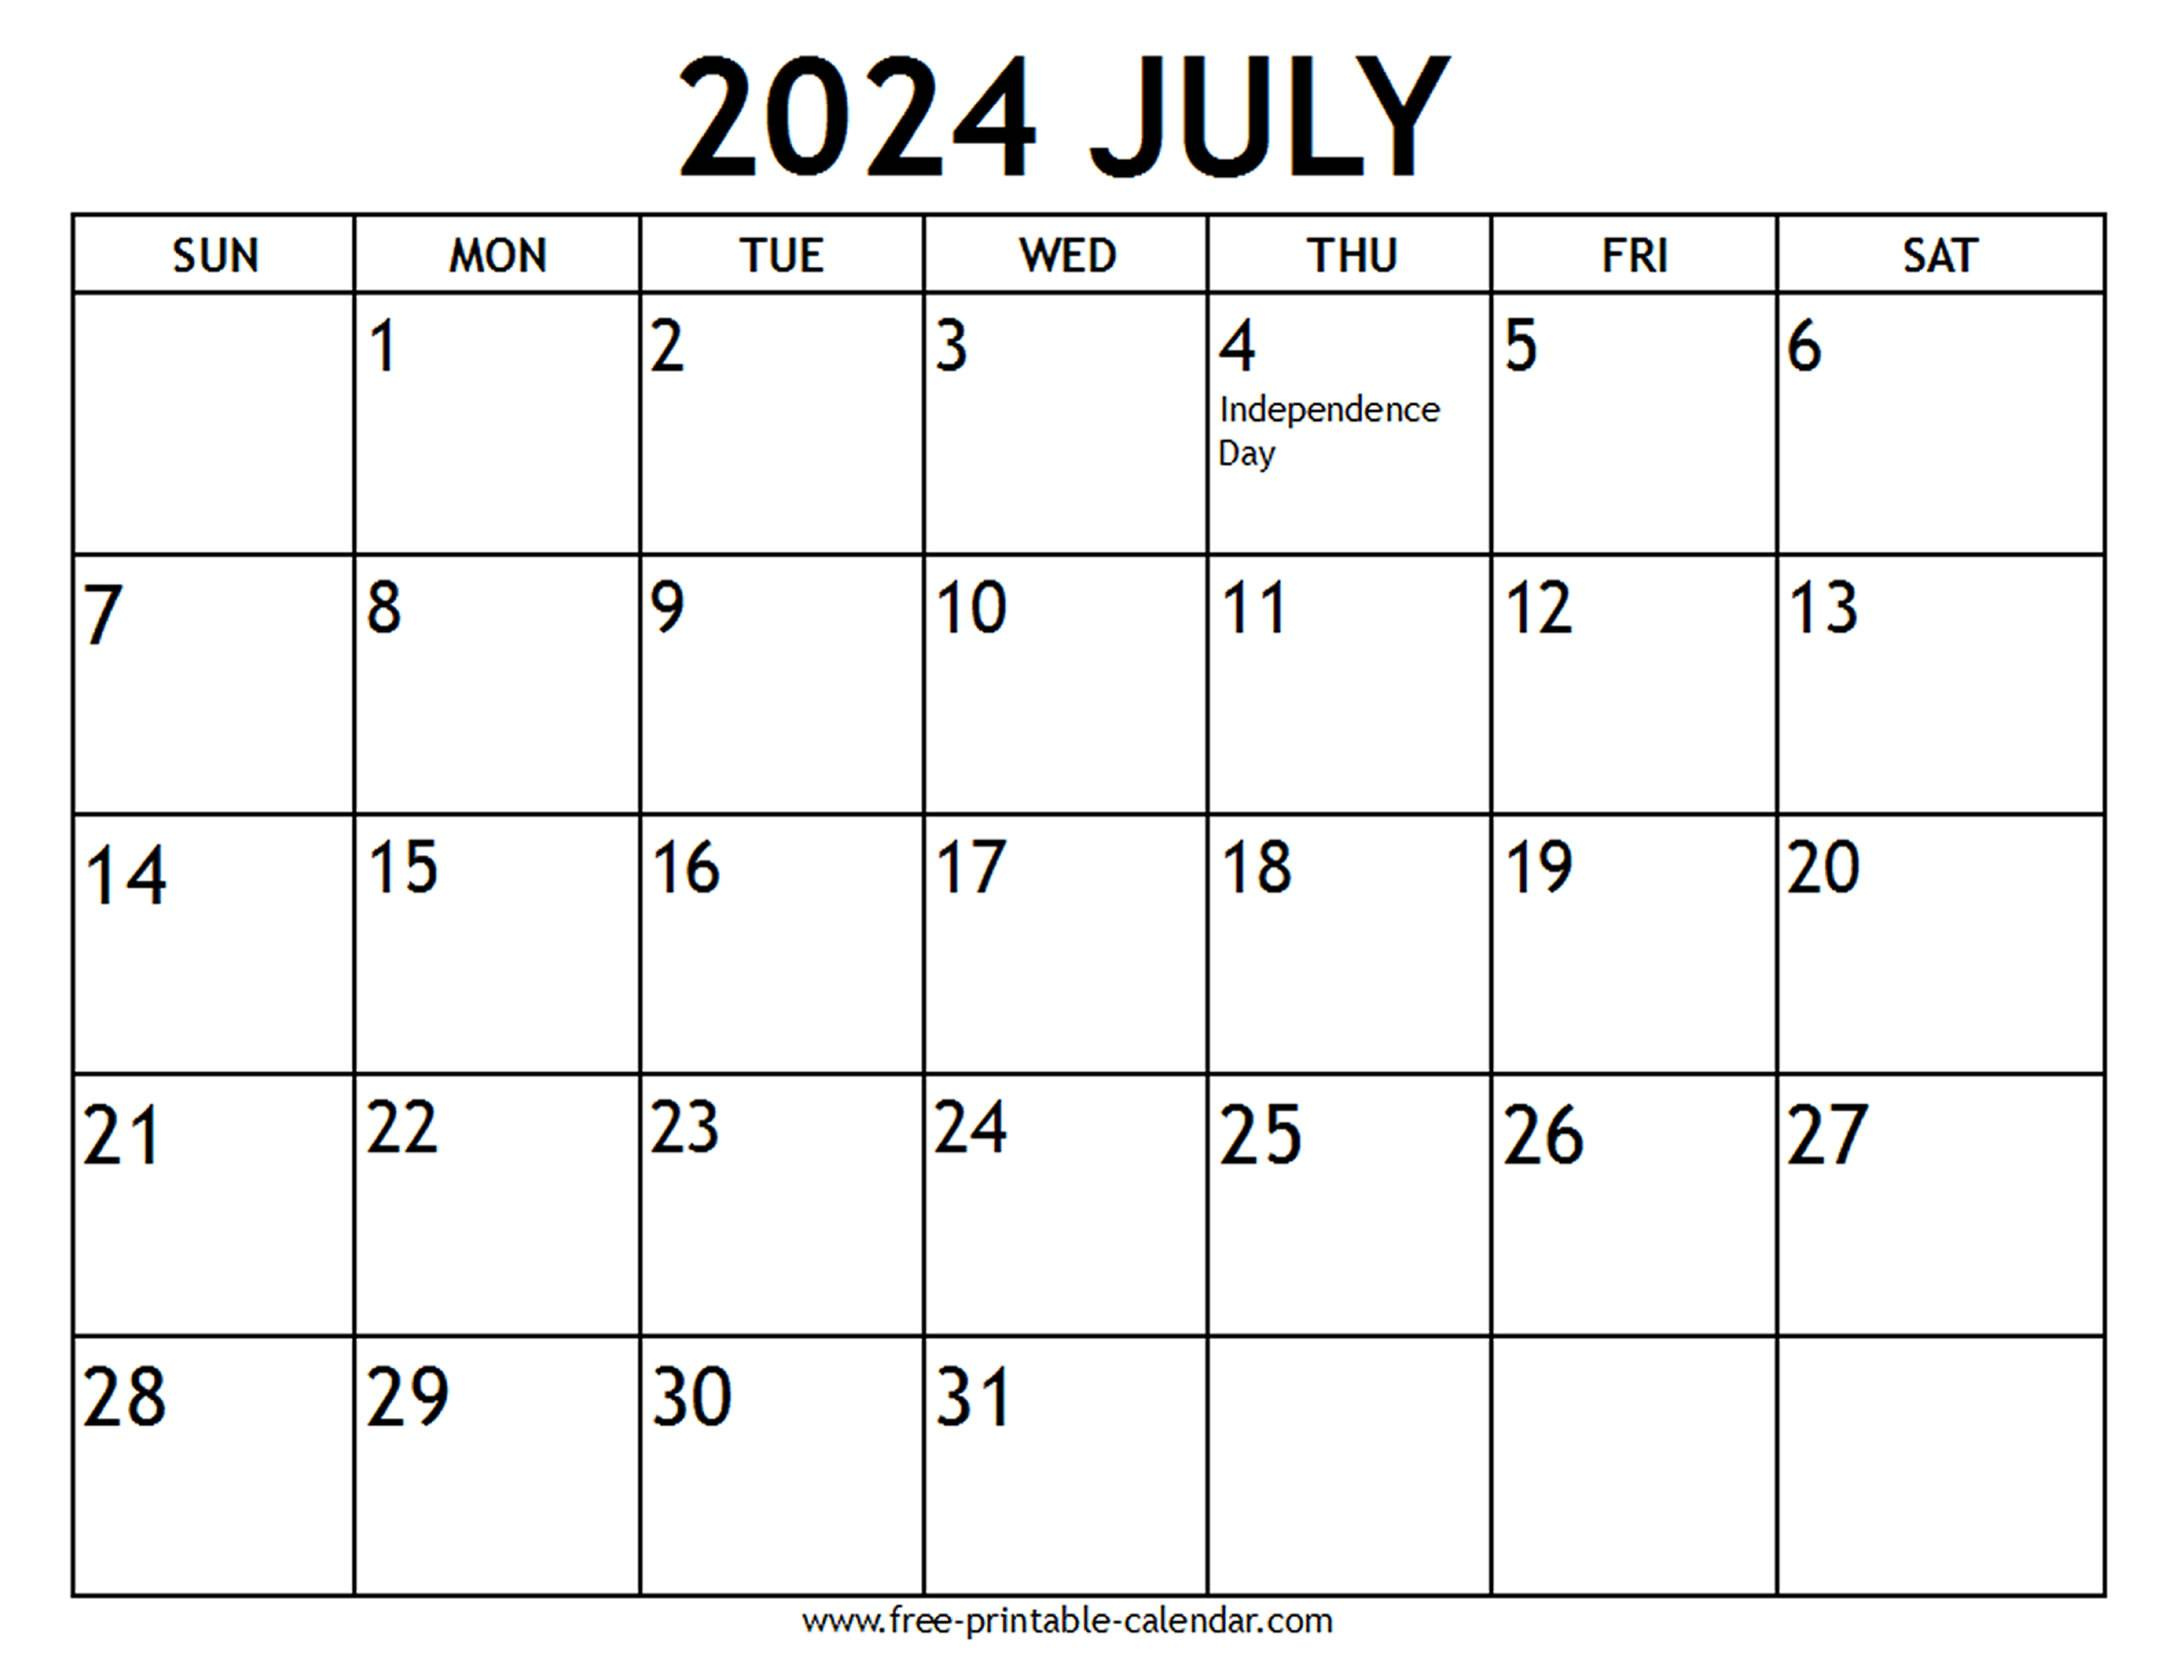 July 2024 Calendar Us Holidays - Free-Printable-Calendar regarding Calendar For July 2024 With Holidays